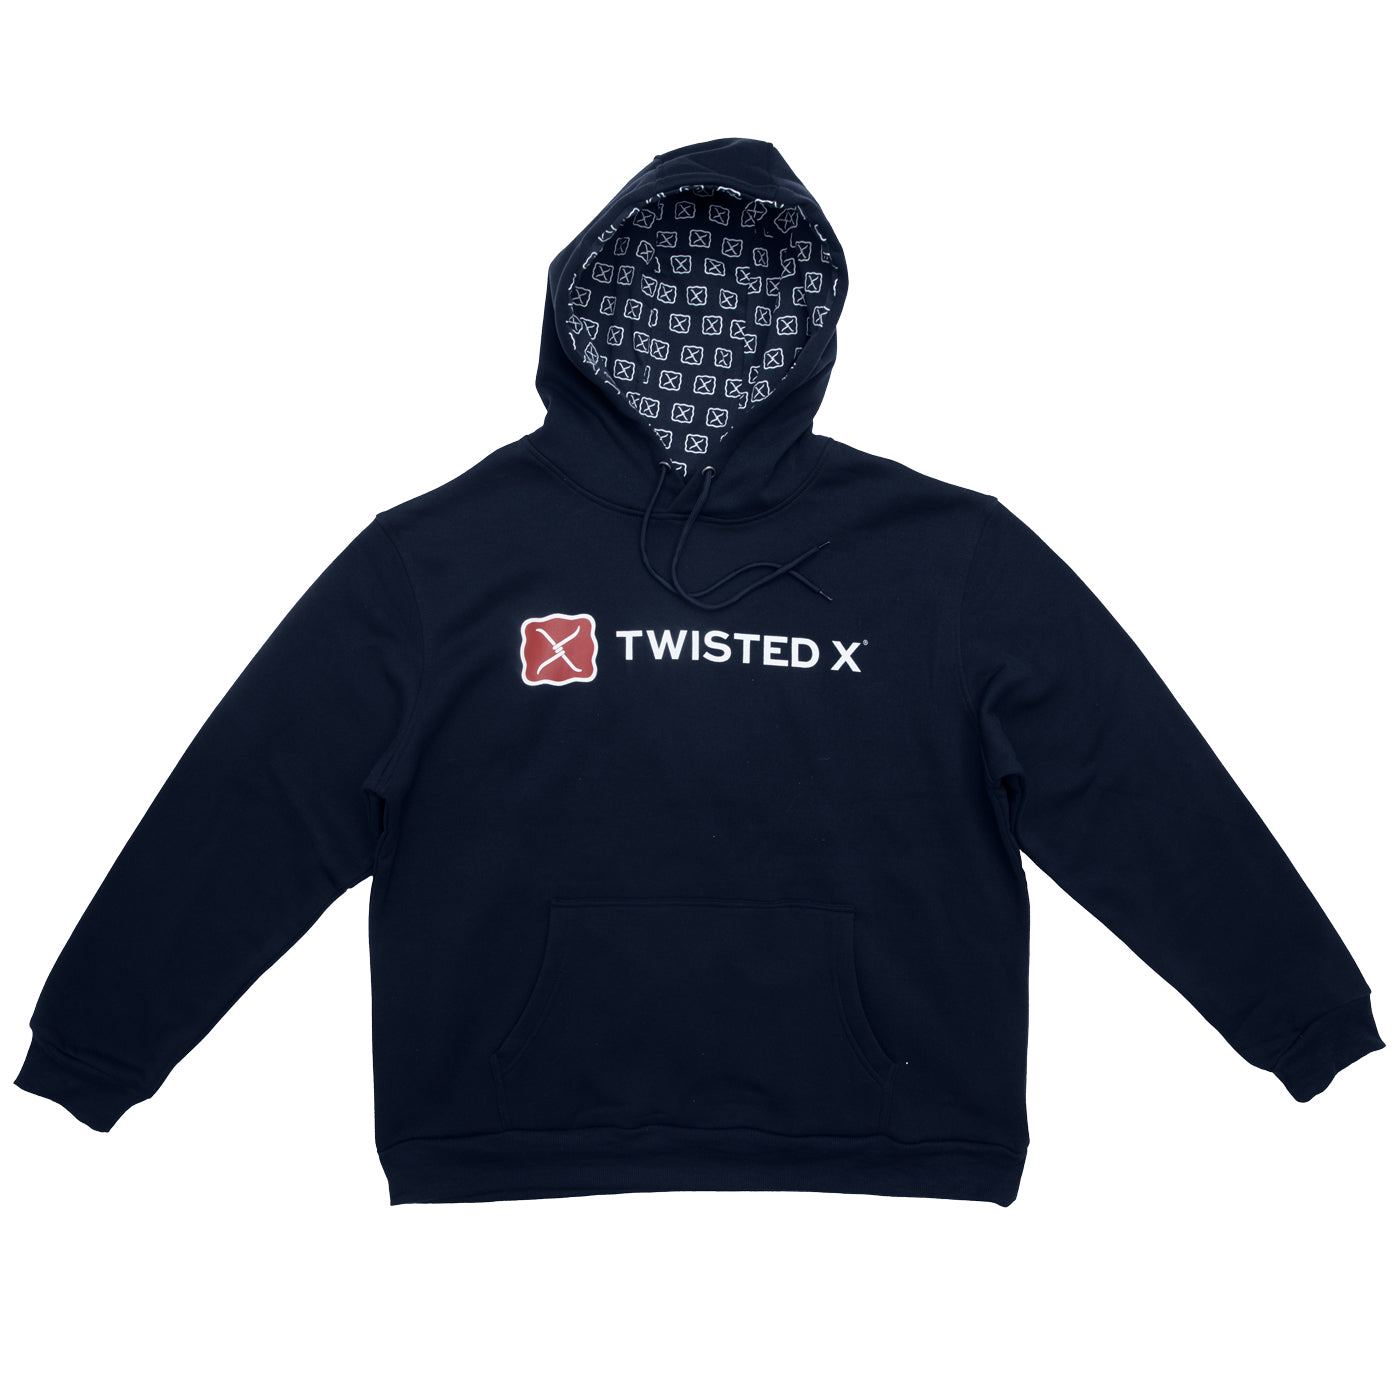 Twisted X Hoodie Sweatshirt STYLE SWSHIRT001